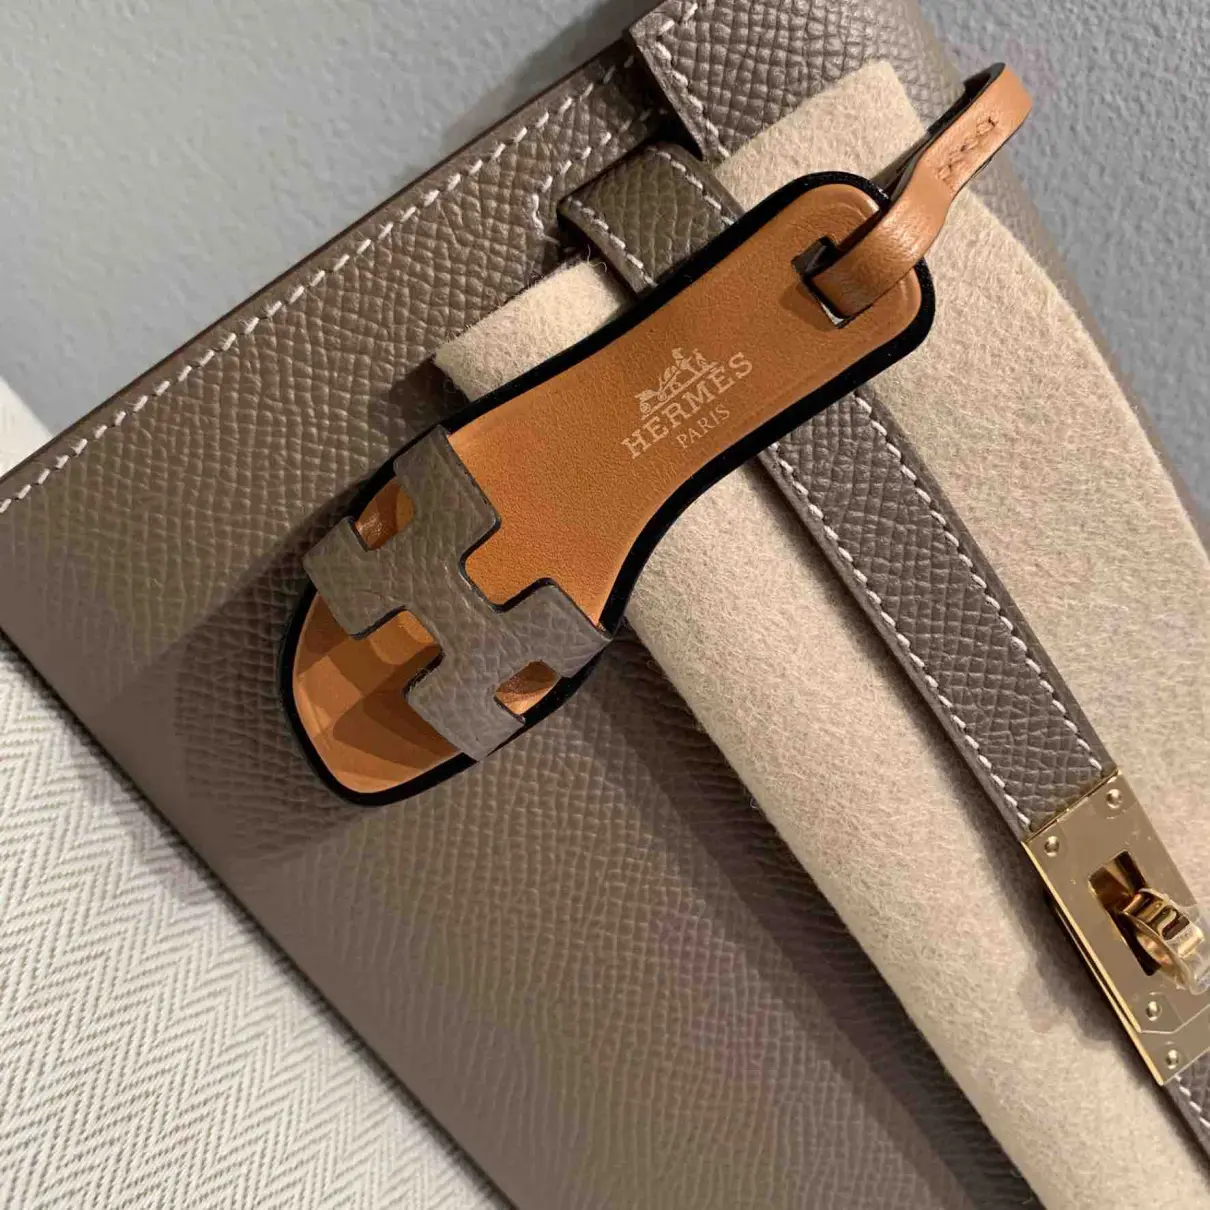 Oran Nano Charm leather bag charm Hermès